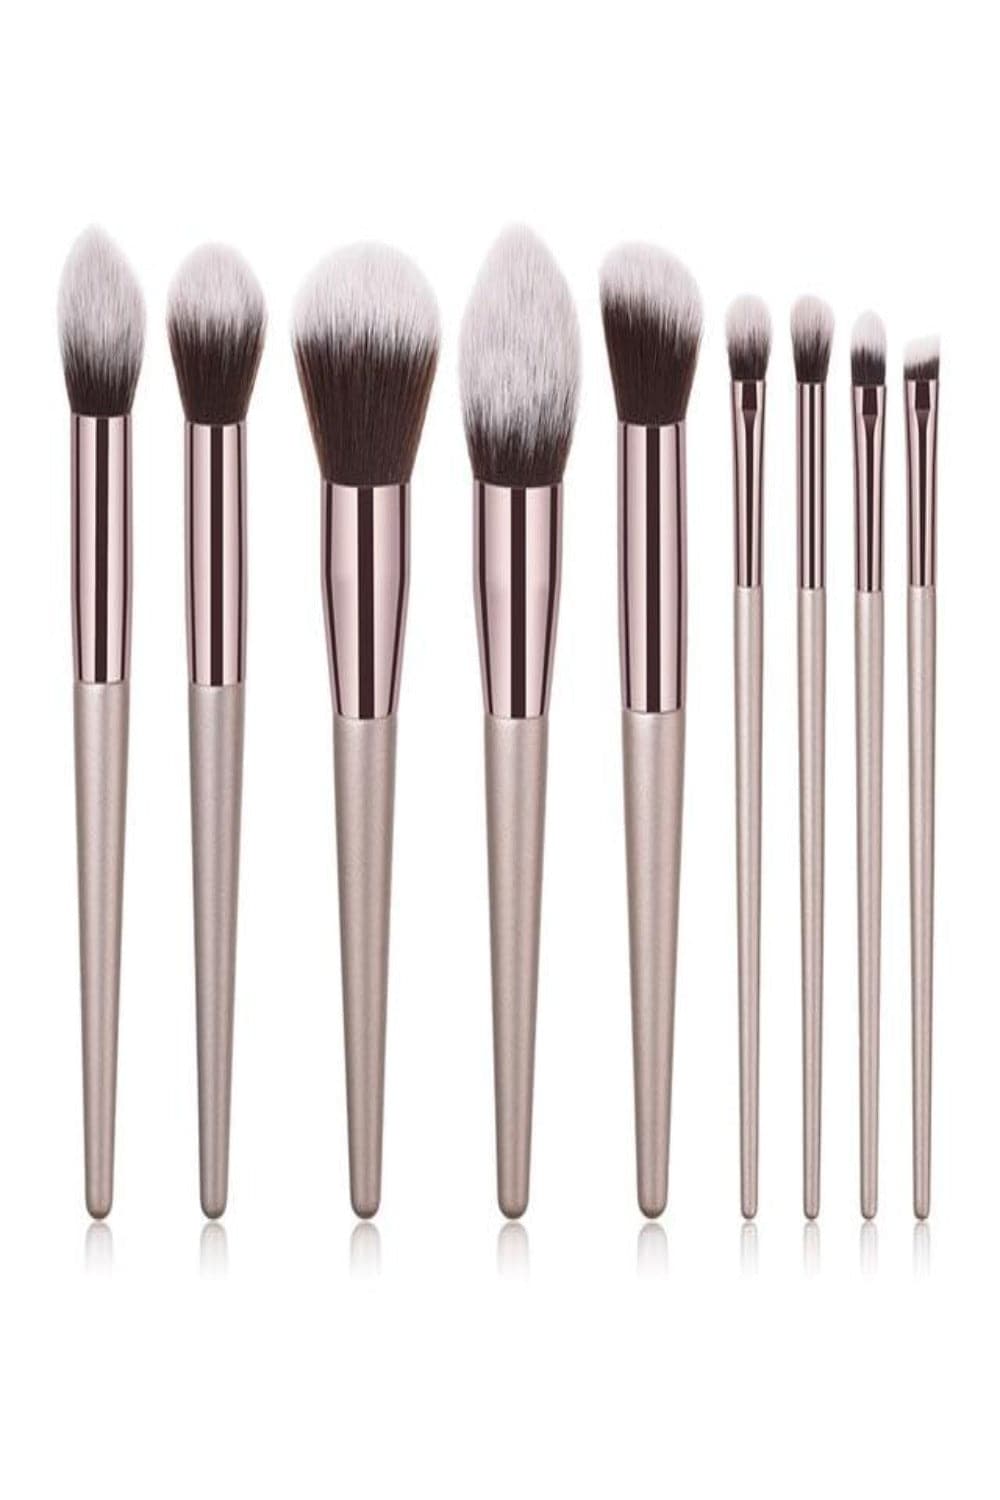 Kabuki Blending Champagne Makeup Brush Set - 10 Pcs - TGC Boutique - Makeup Brush Set